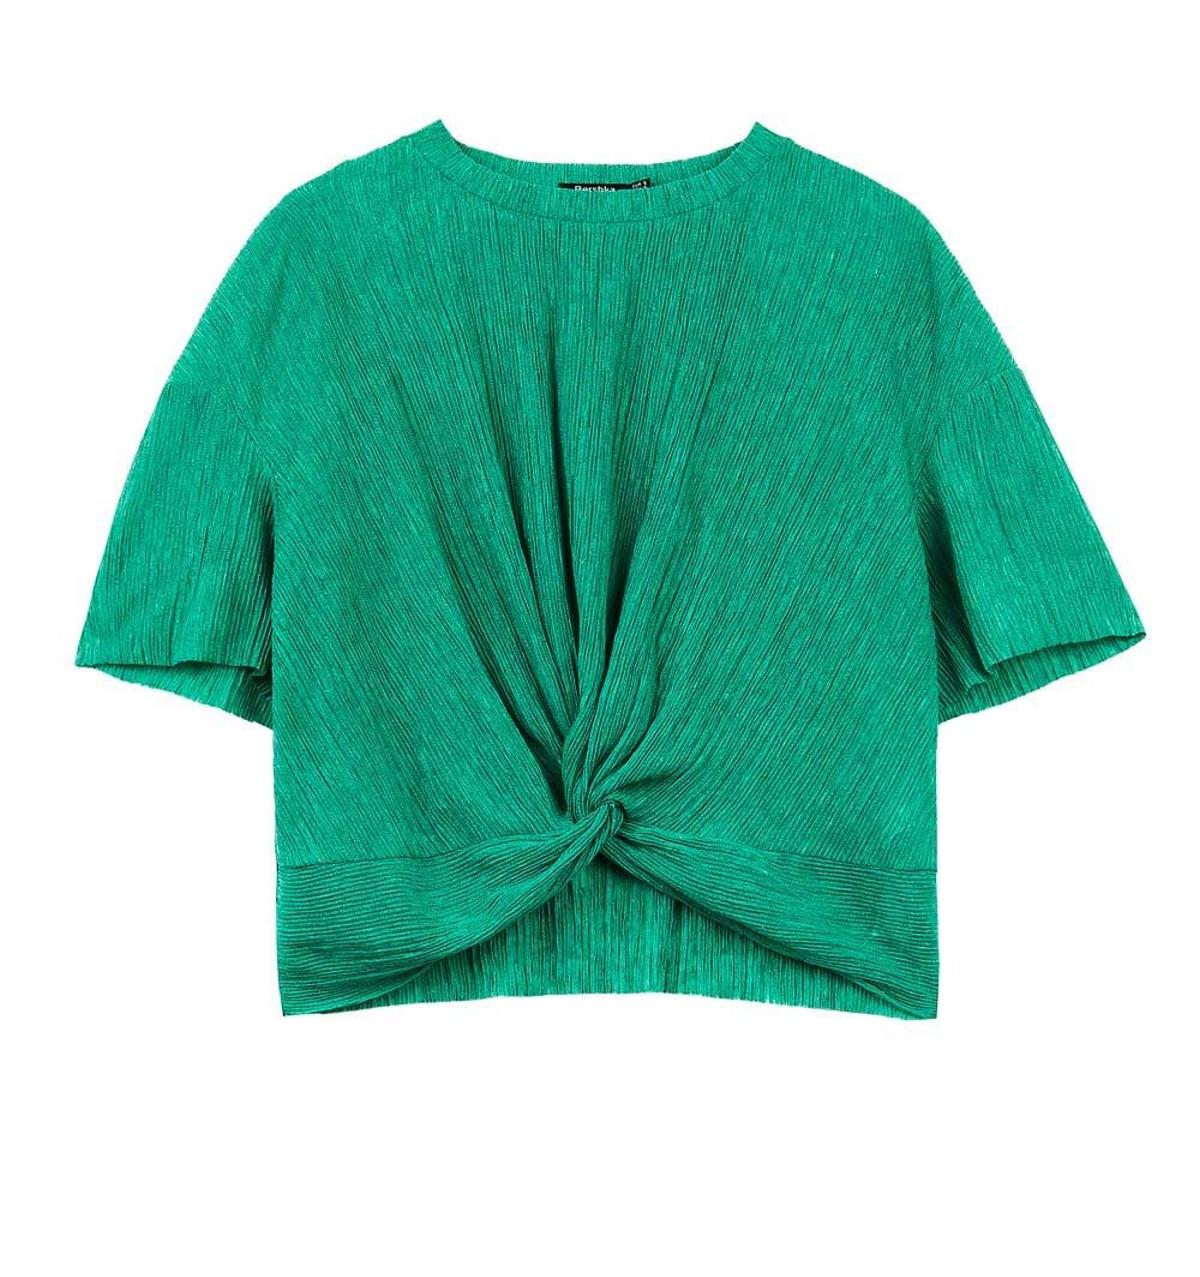 Camiseta con nudo verde de Bershka. (Precio: 12, 99 euros)